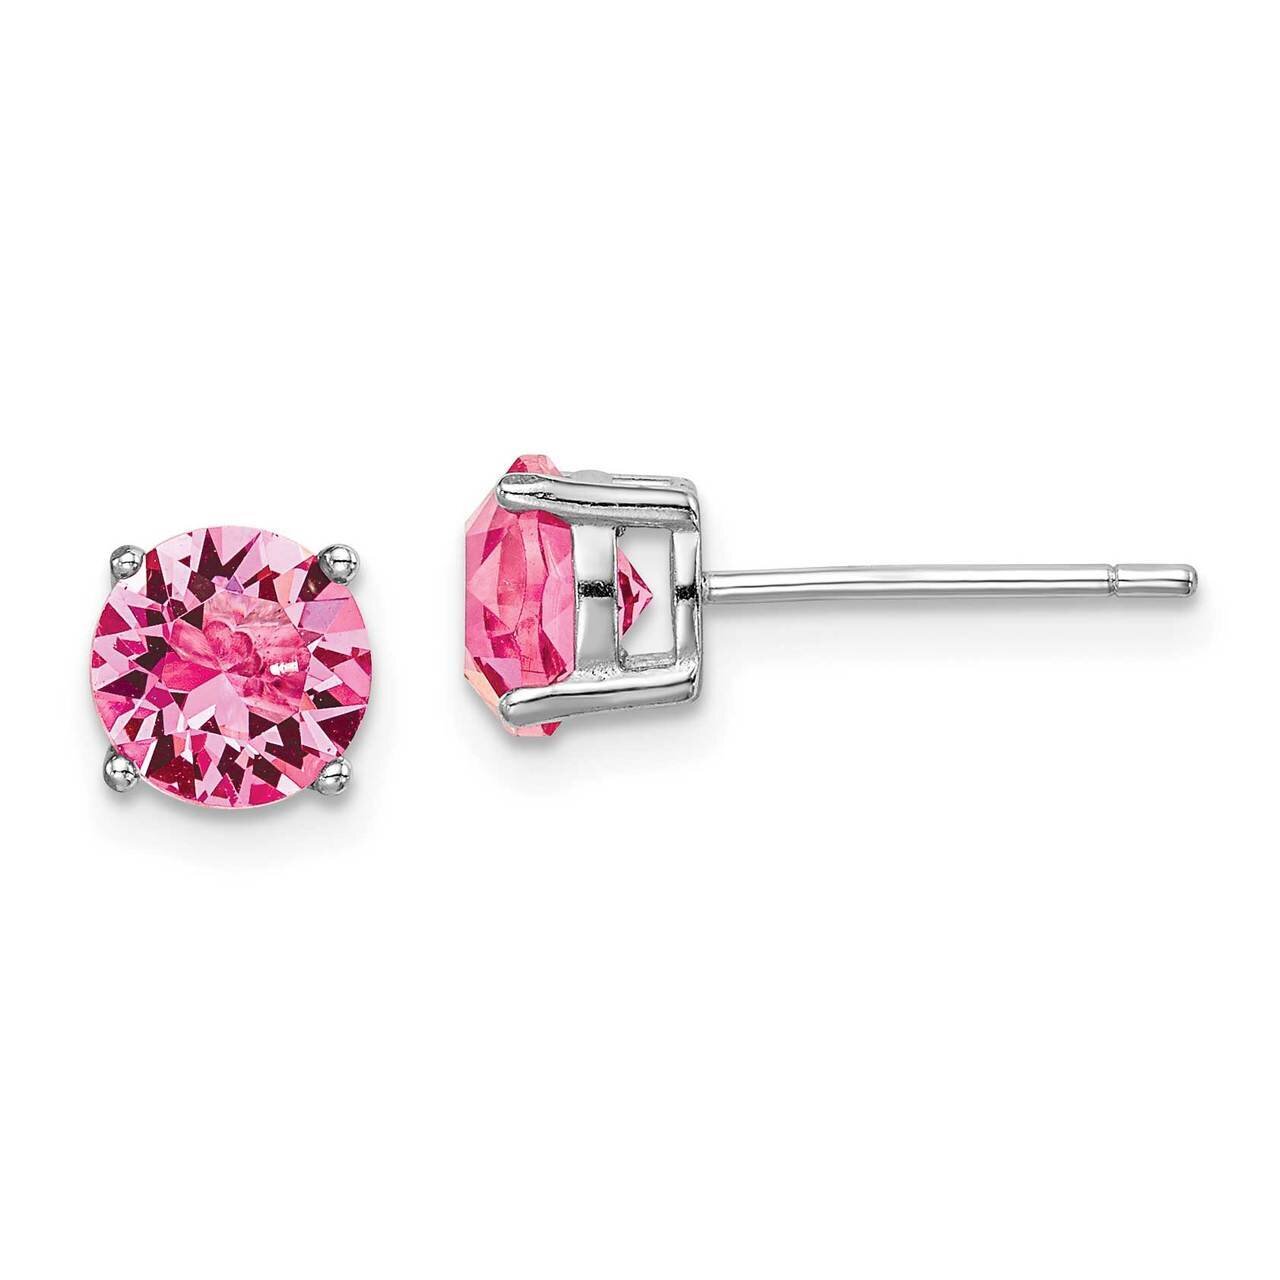 Pink Swarovski Crystal Birthstone Earrings Sterling Silver Rhodium-plated QE14067OCT